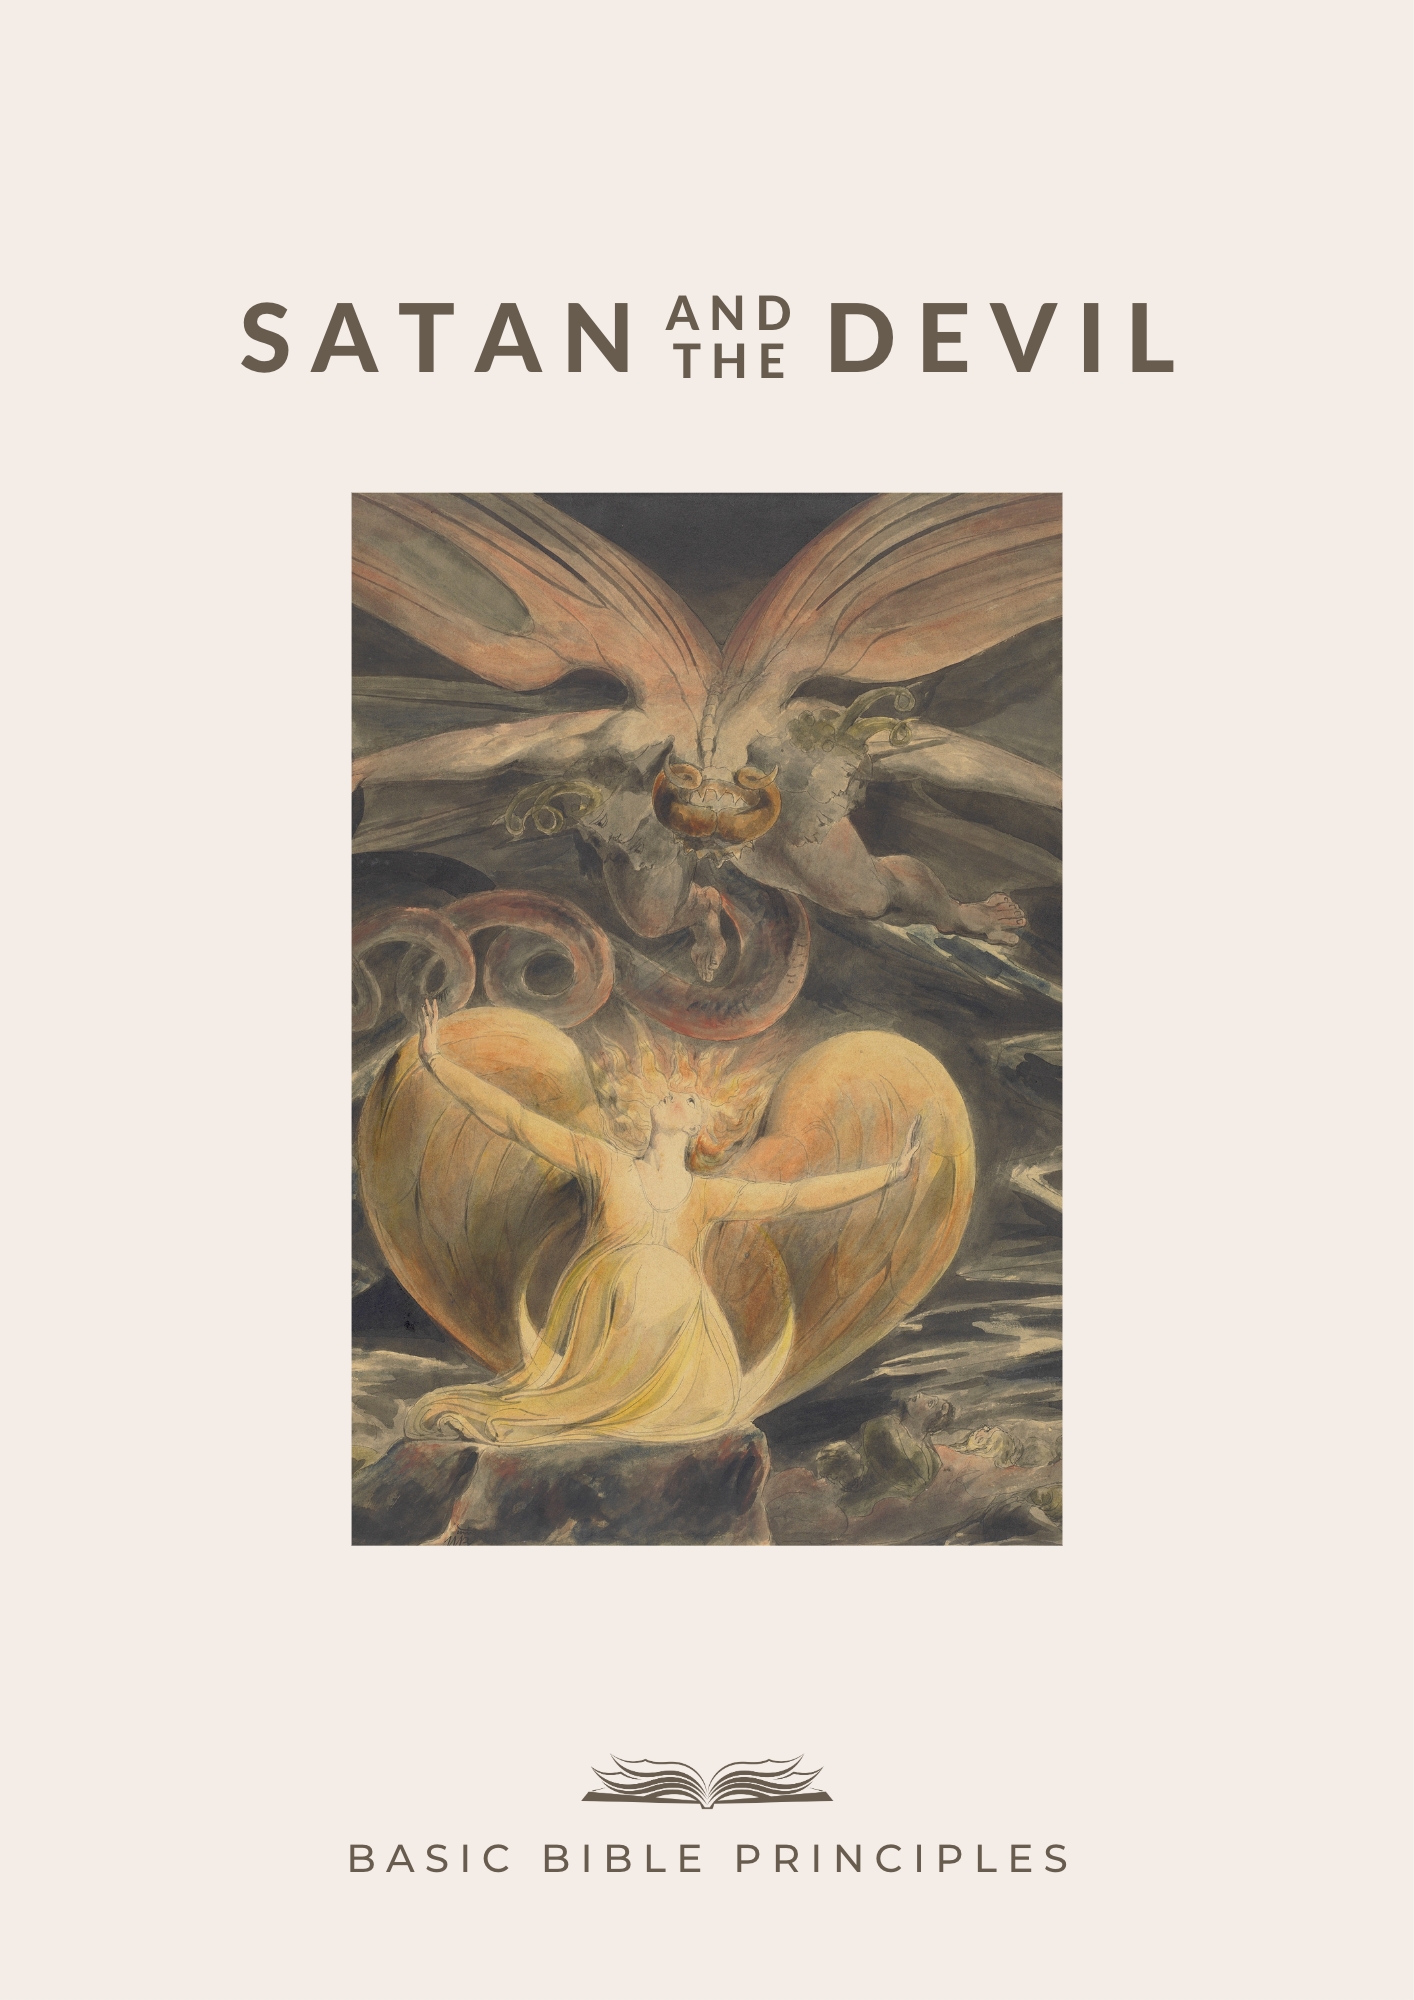 Basic Bible Principles: SATAN AND THE DEVIL